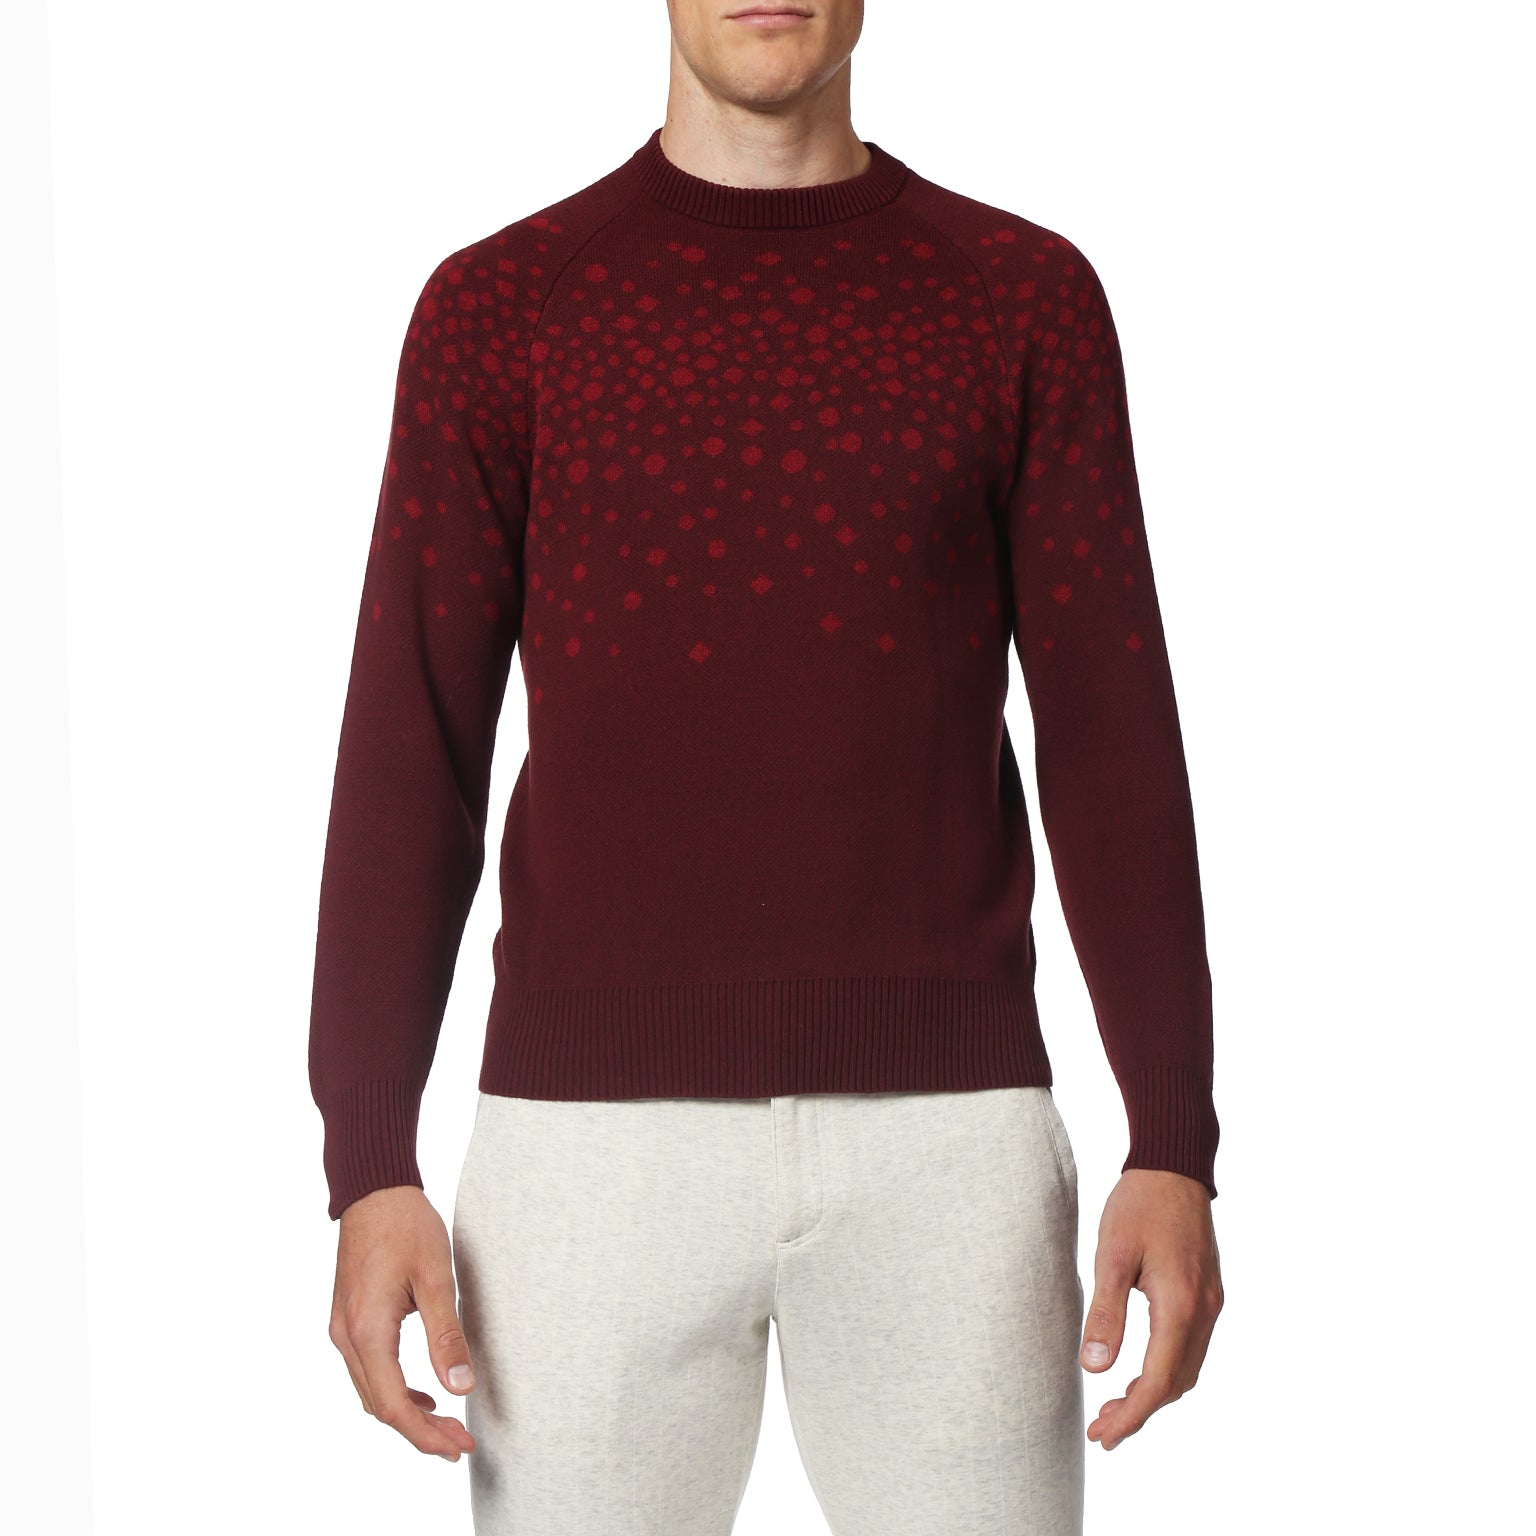 SAVE 70%- Mars Red Starlight Sweater